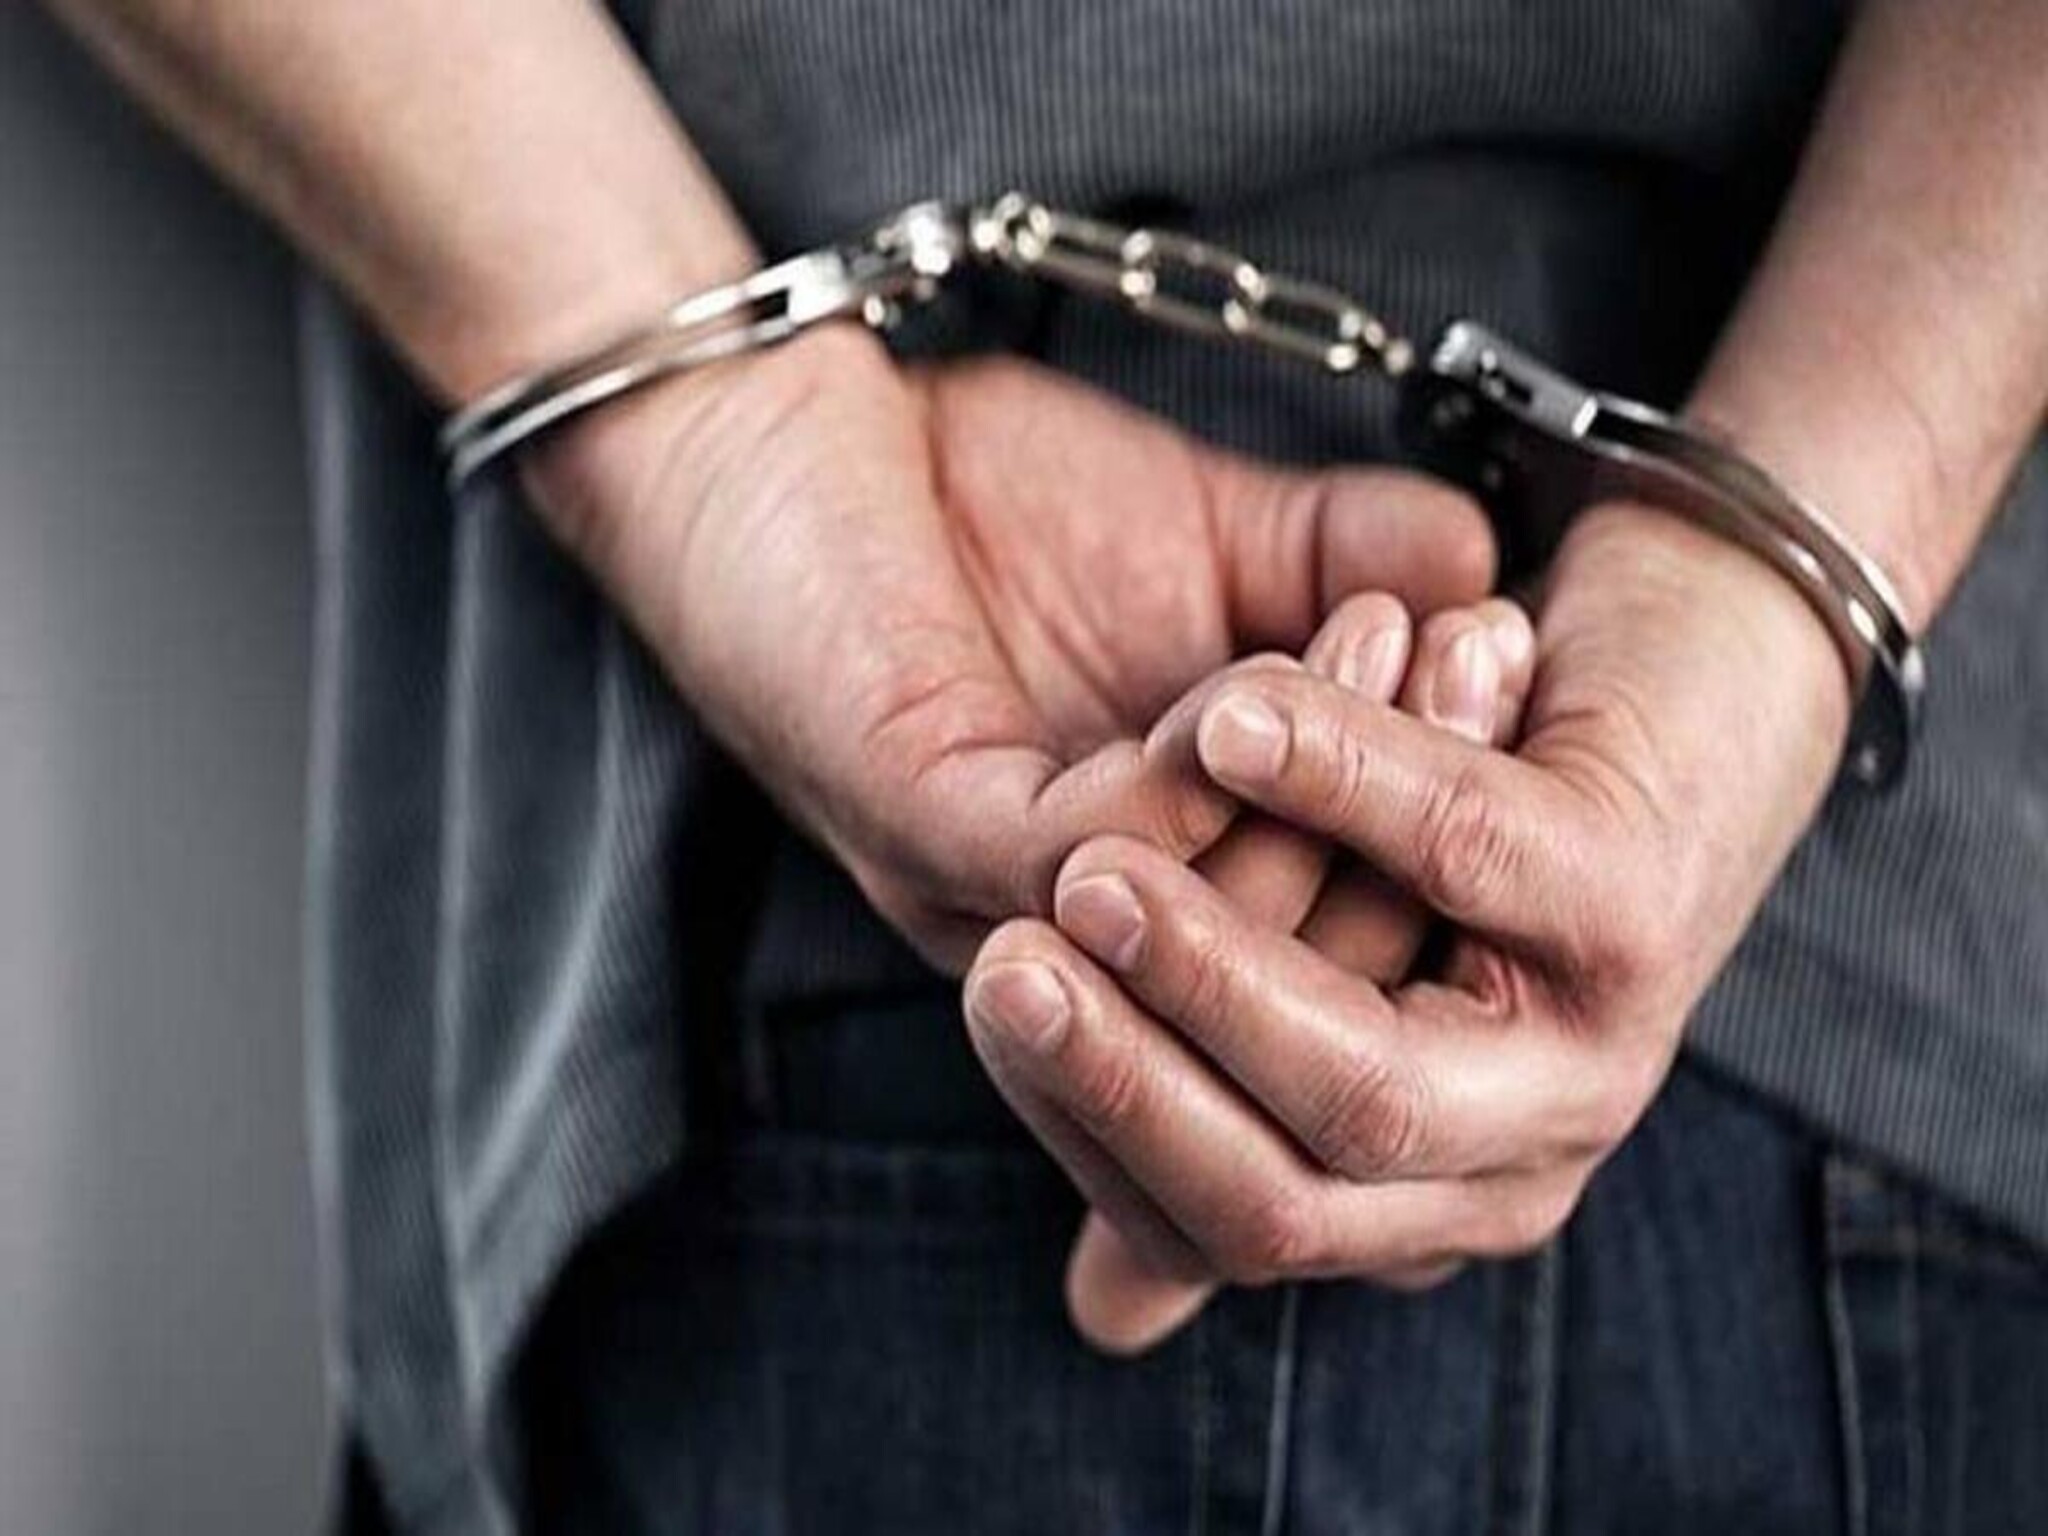 UAE Police Retrieve Dh300,000 Stolen from Woman in Online Scam